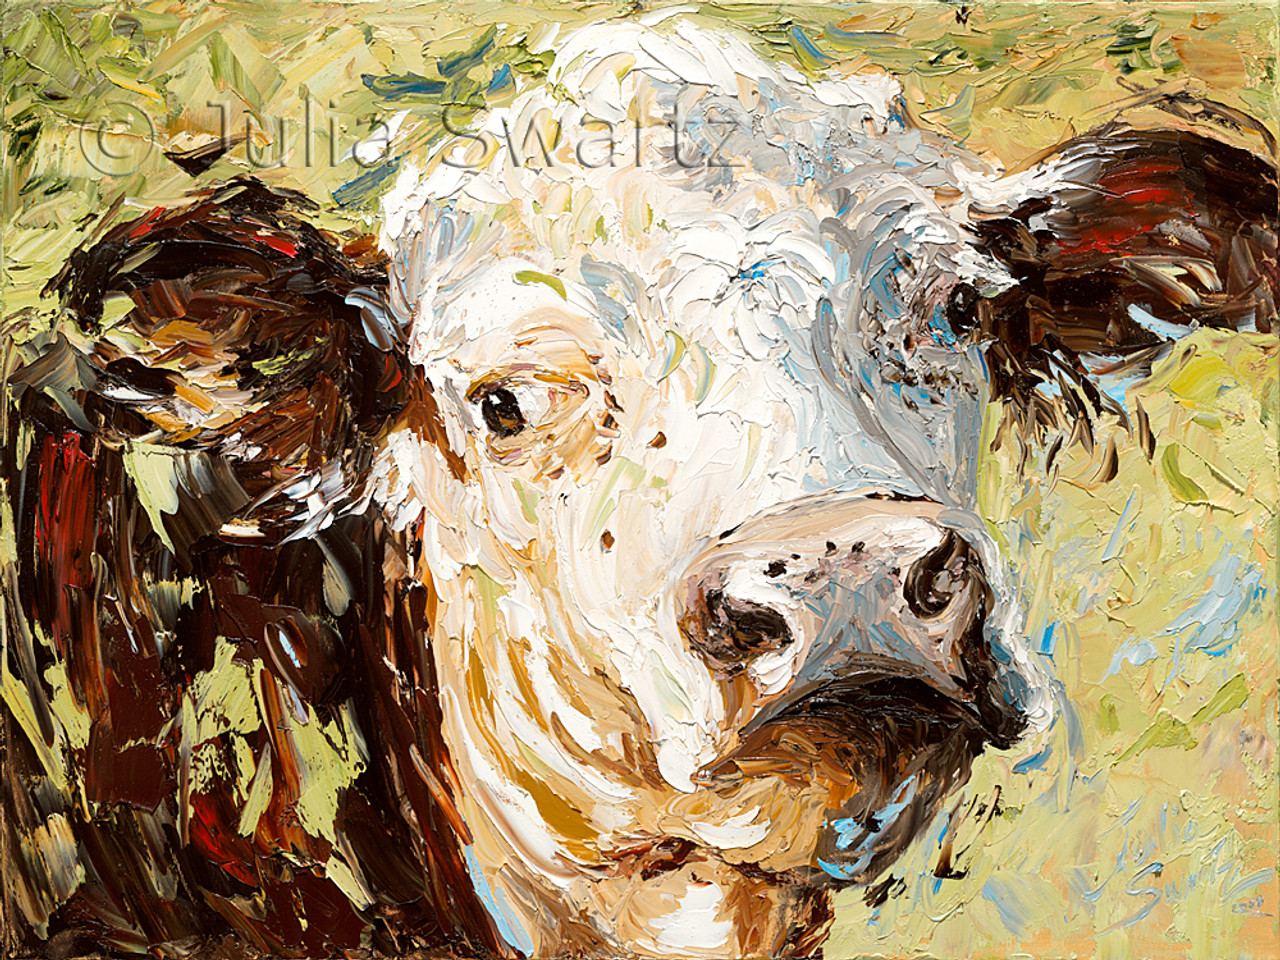 Bright Red Cow Prints Background Stock Illustration - Illustration